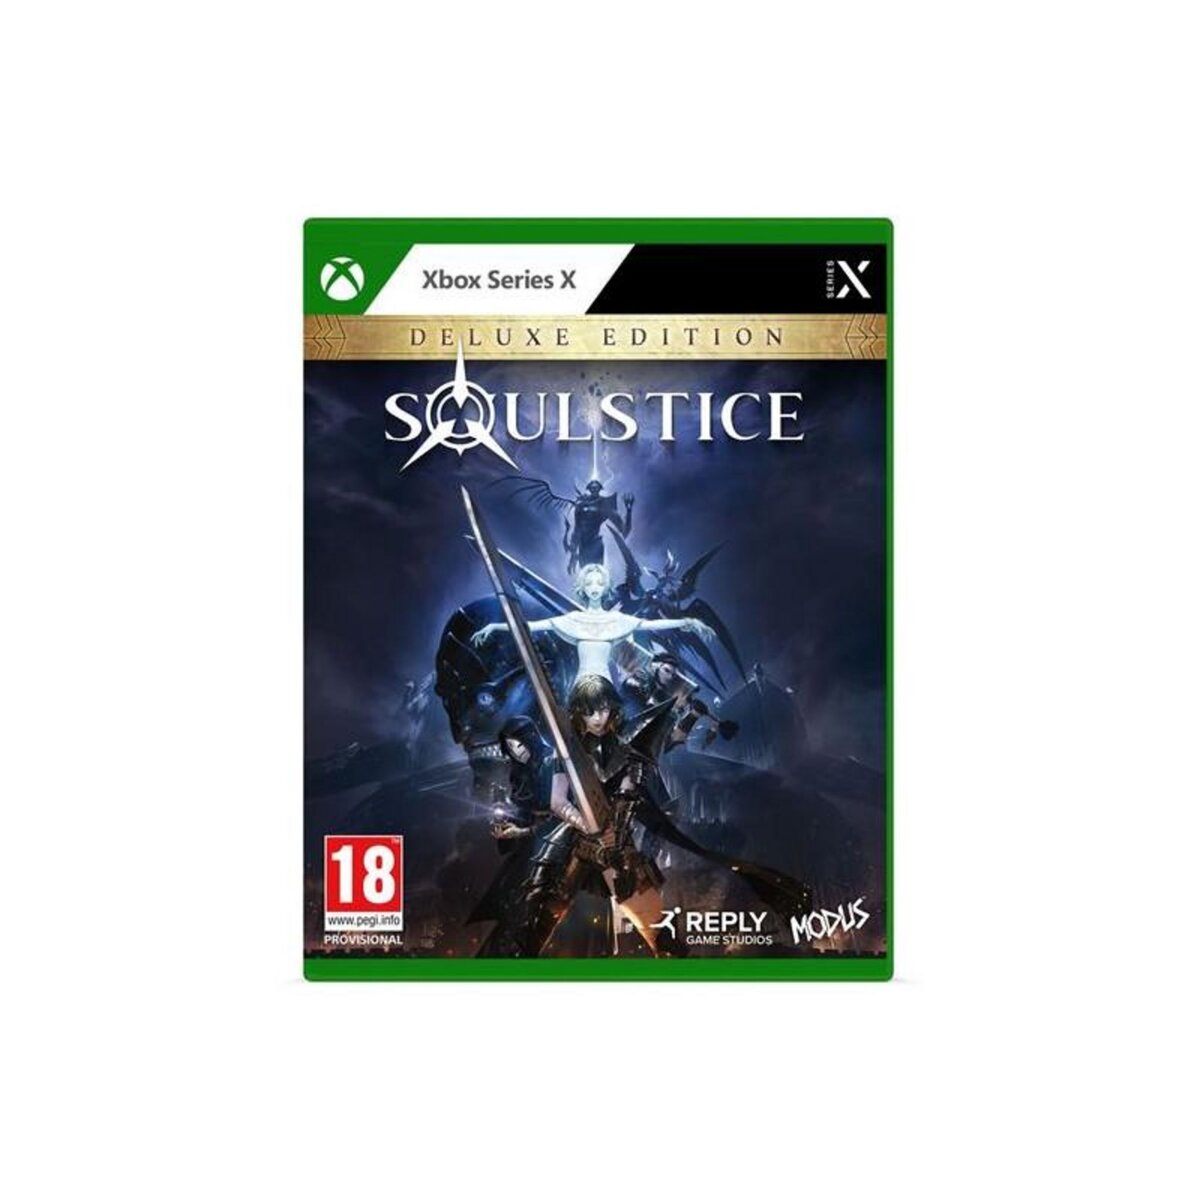 PREMIUM Soulstice Deluxe Edition Xbox Series X